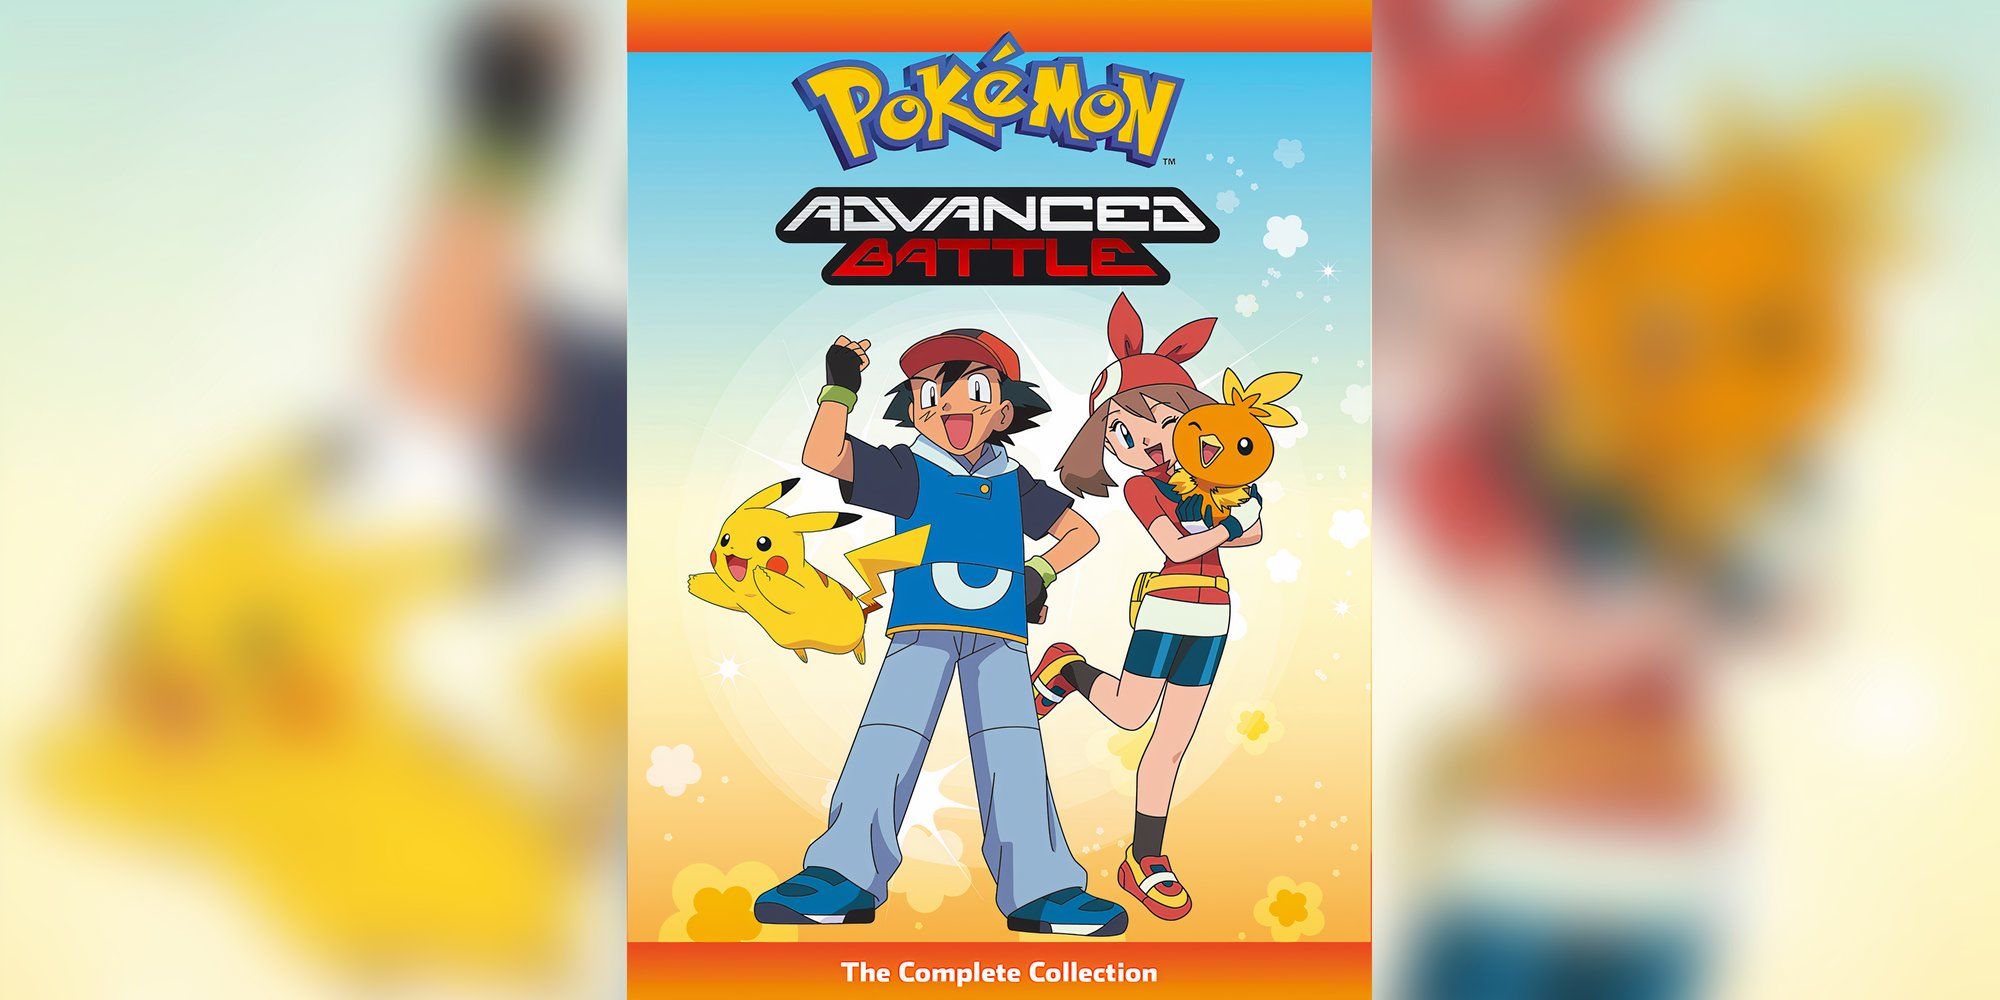 Pokemon Advance Battle DVD Cover